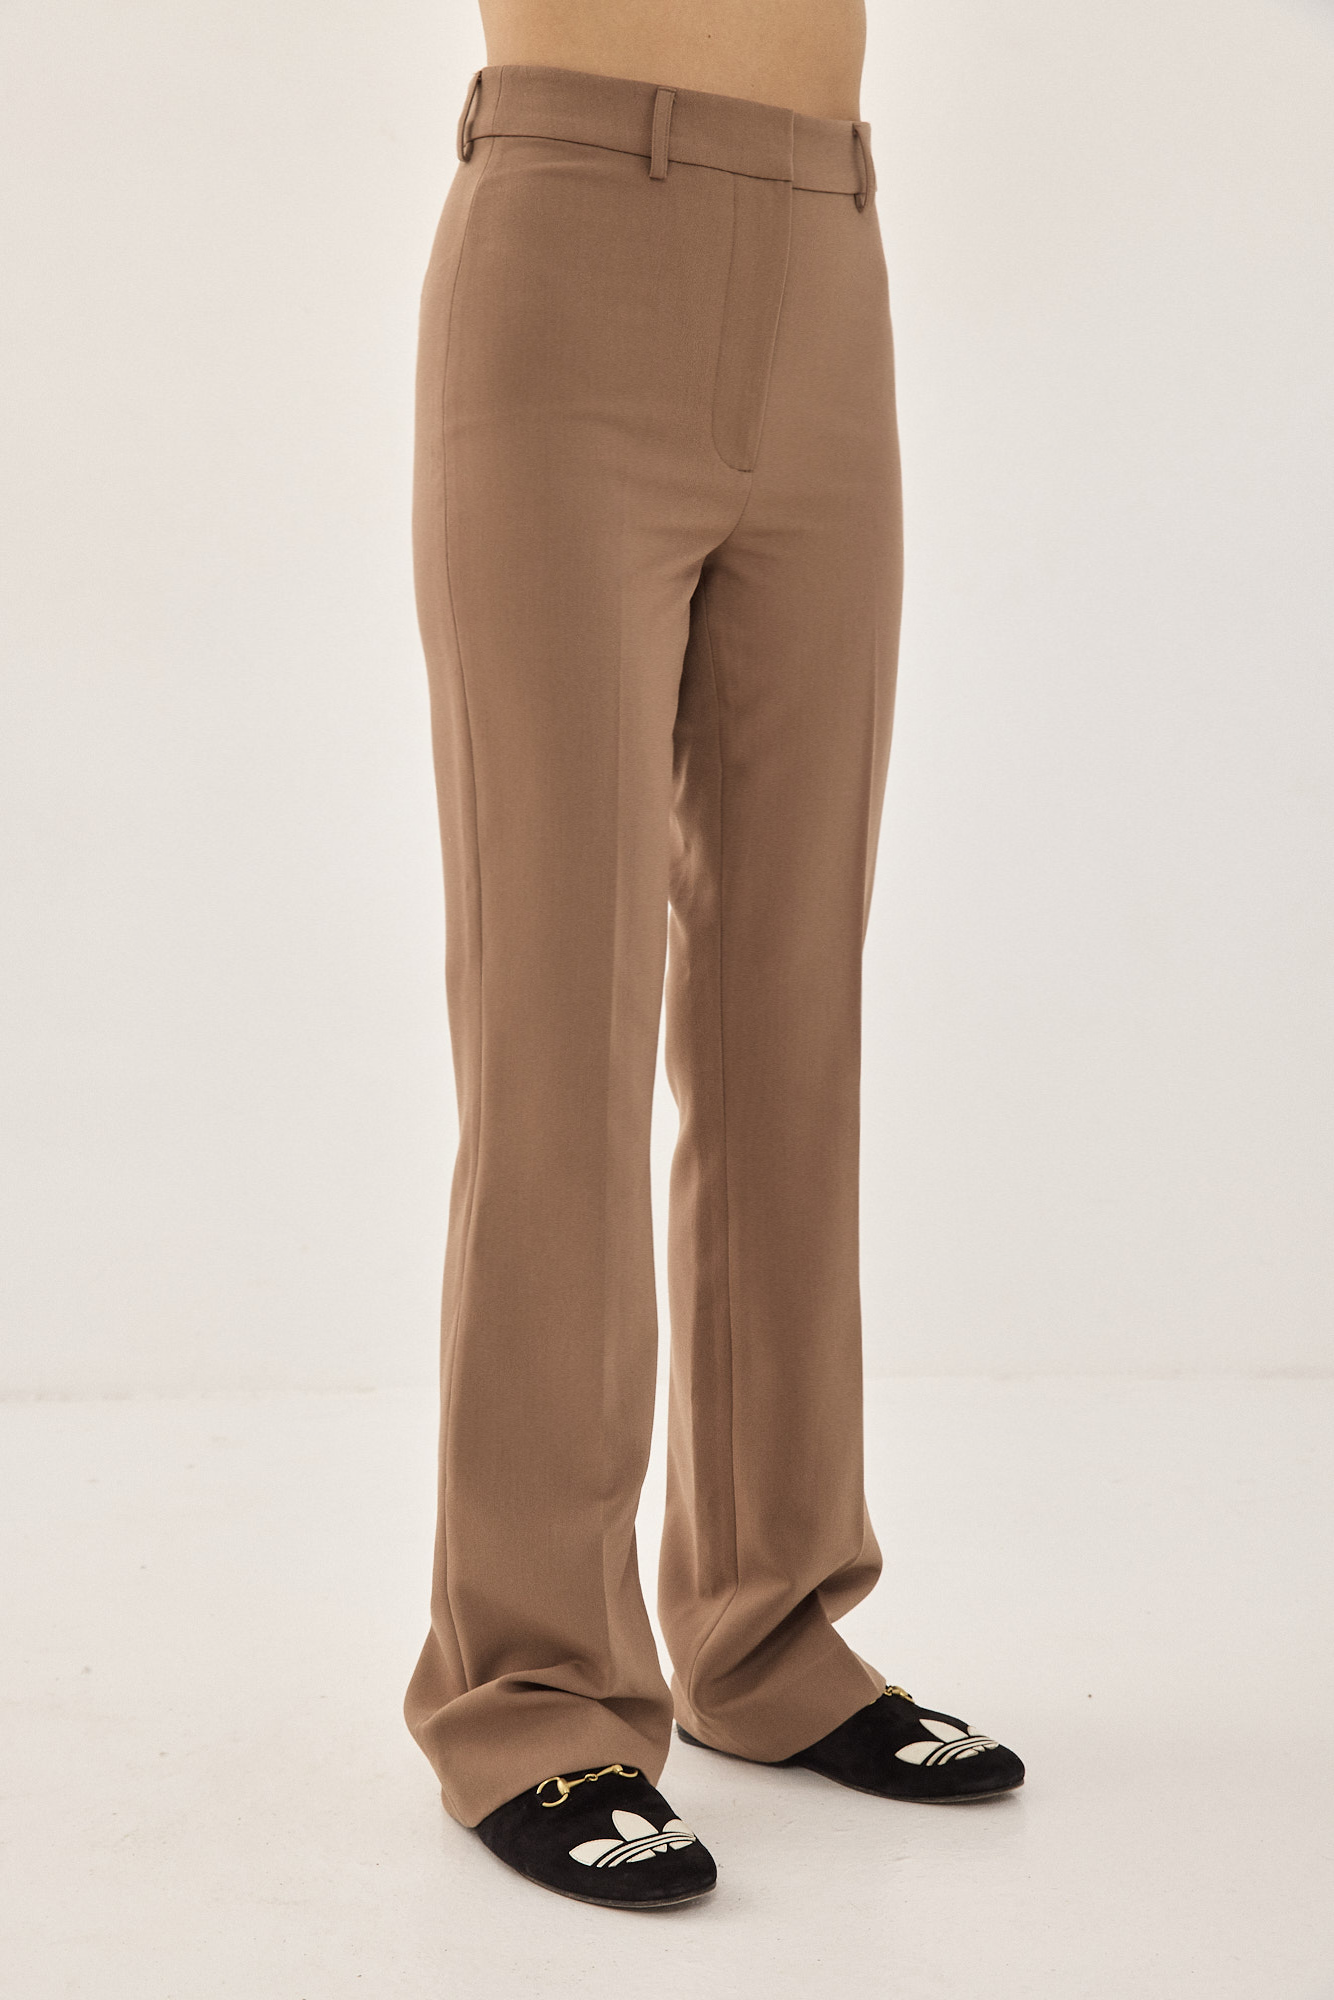 Buy Gloria Vanderbilt Women's Amanda Refined Trouser Pant, Sandal, 12 Tall  at Amazon.in